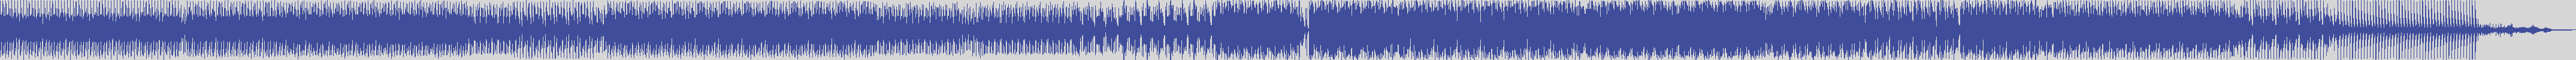 atomic_recordings [AR014] Andrew Nagorny, Steve V - Creams [Original Mix] audio wave form